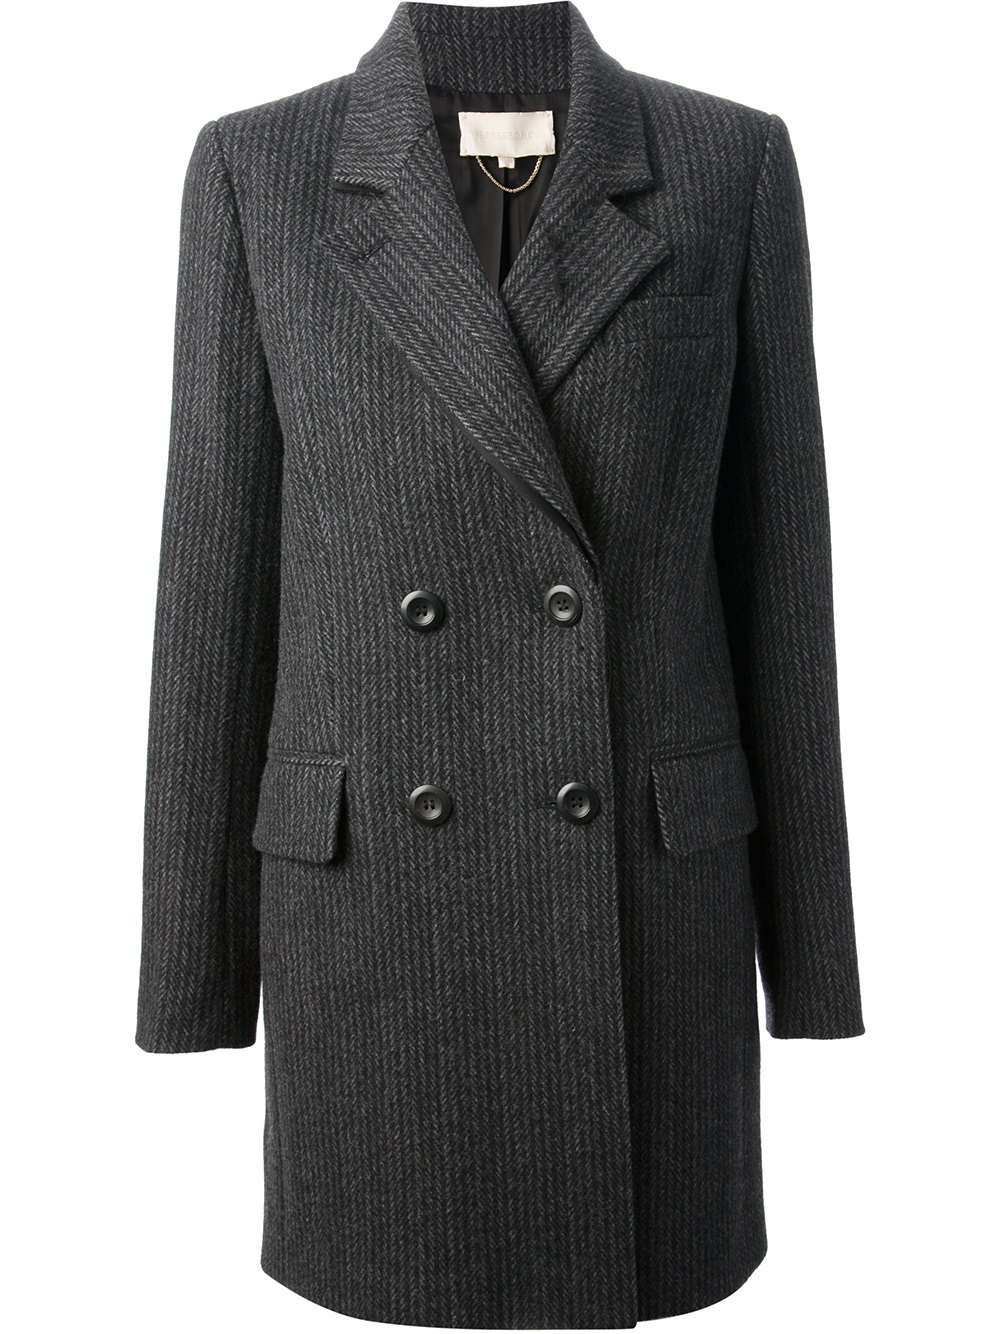 Vanessa bruno Stripe Coat in Black | Lyst